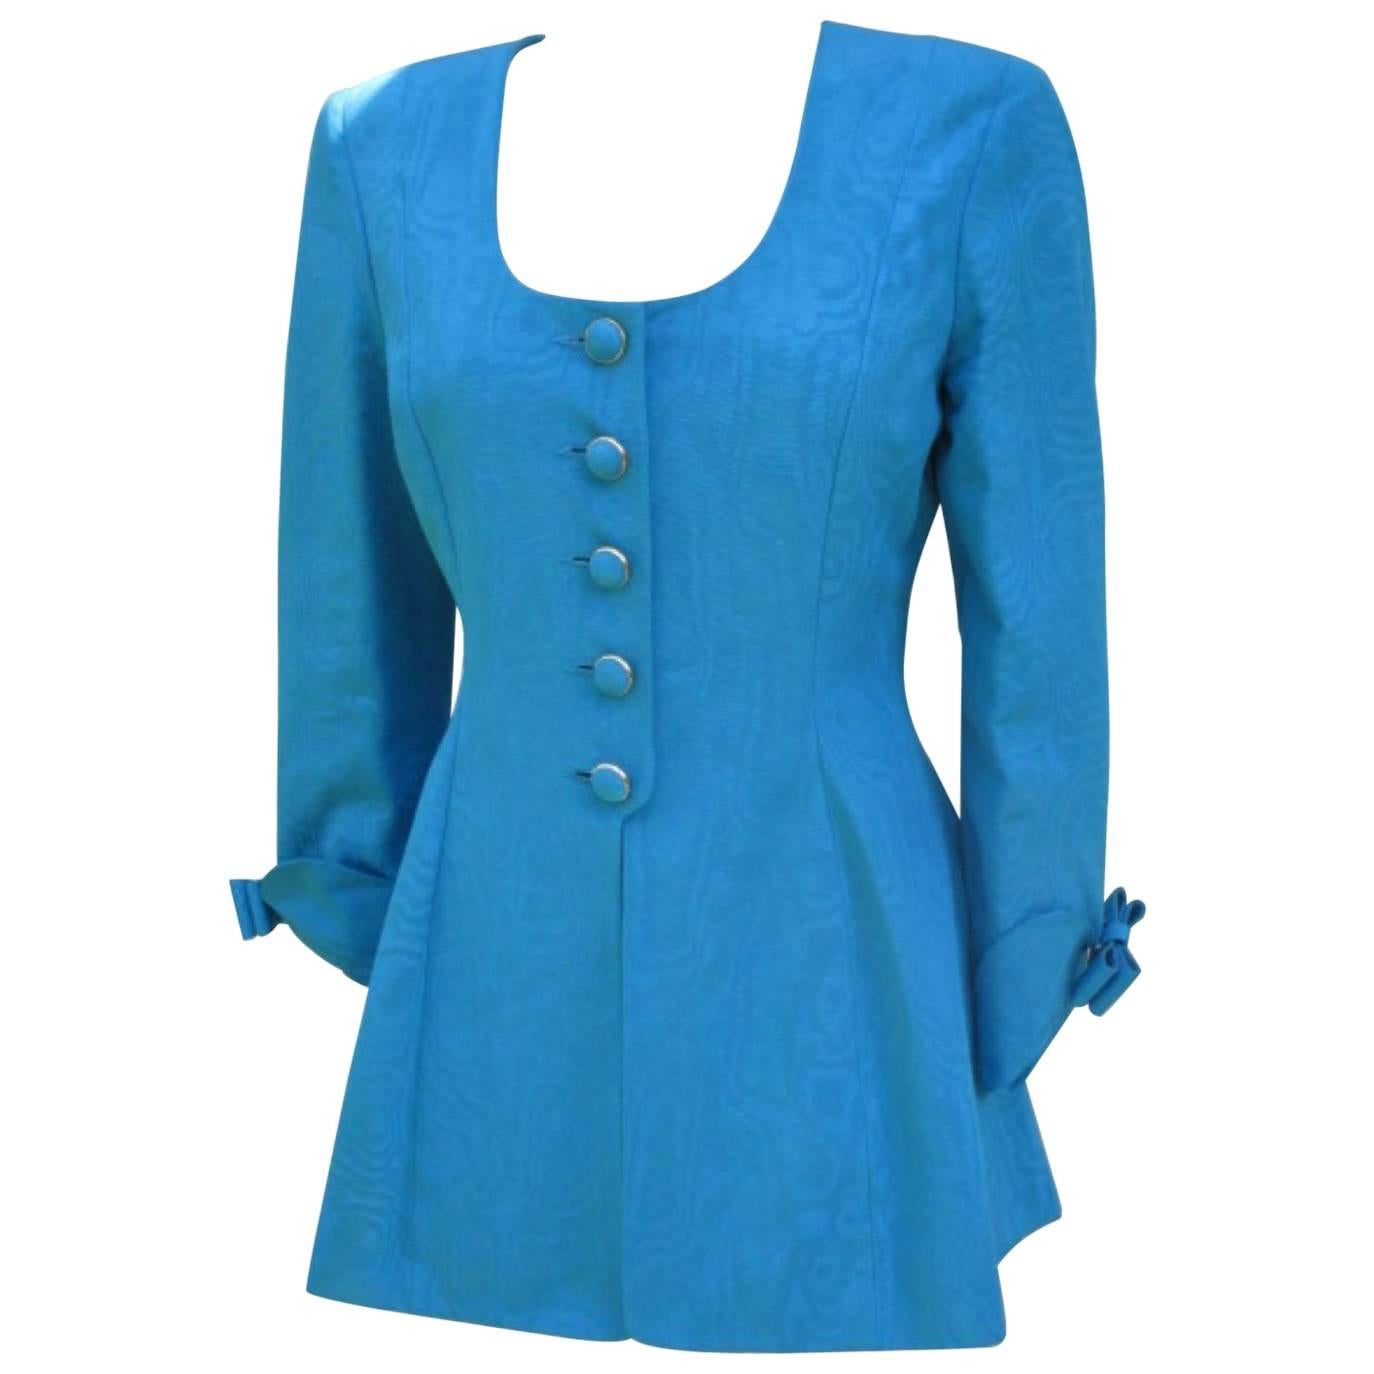 Nina Ricci paris turquoise bows jacket with skirt 